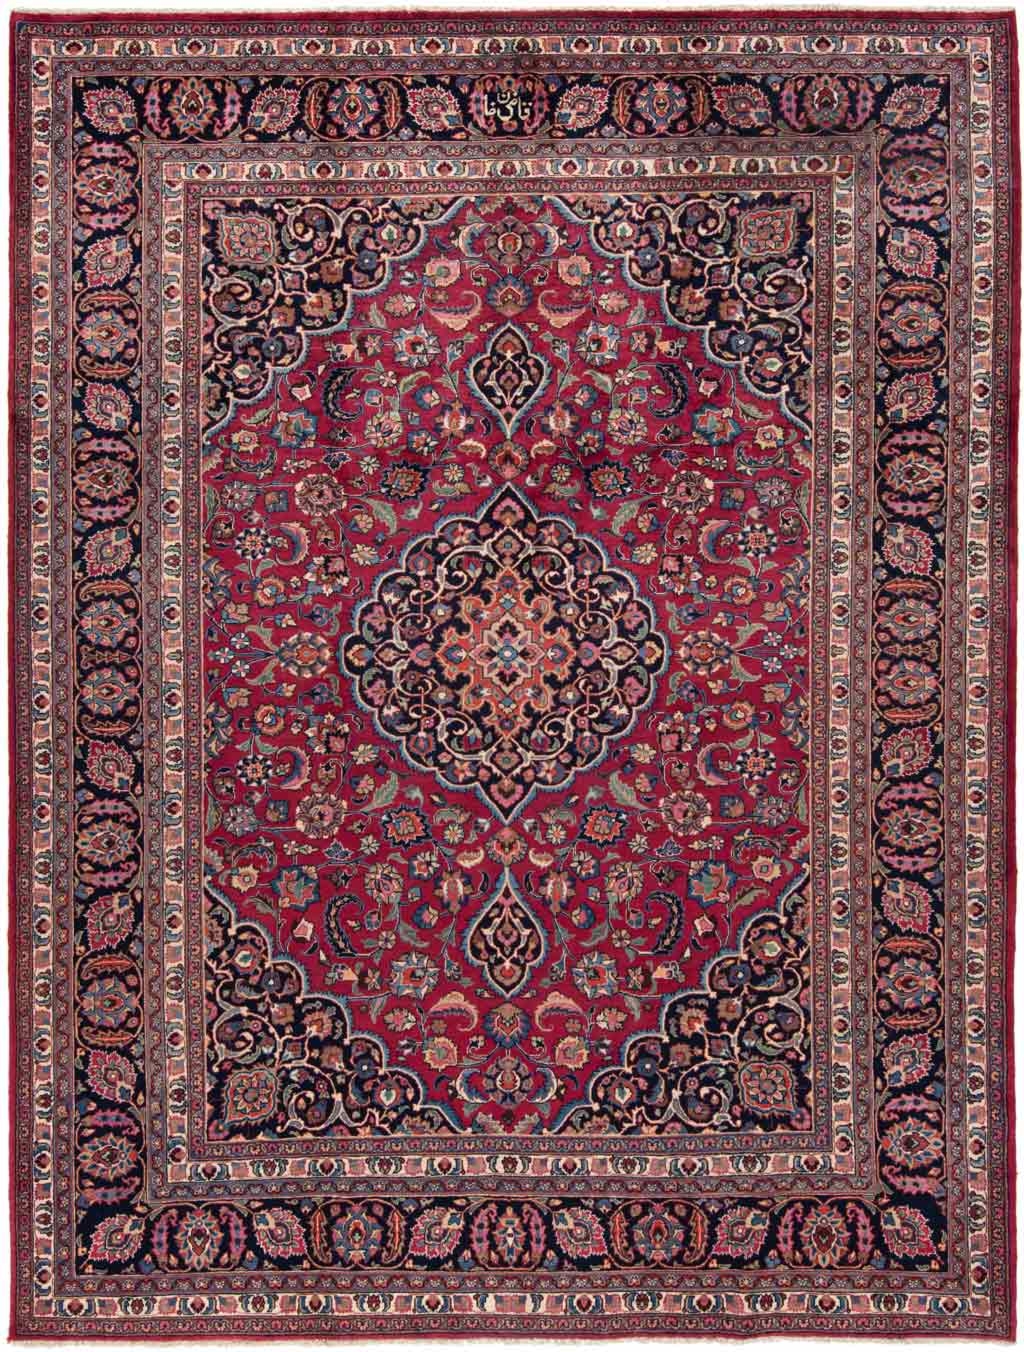 Mashhad Persian Rug Red 340 x 254 cm